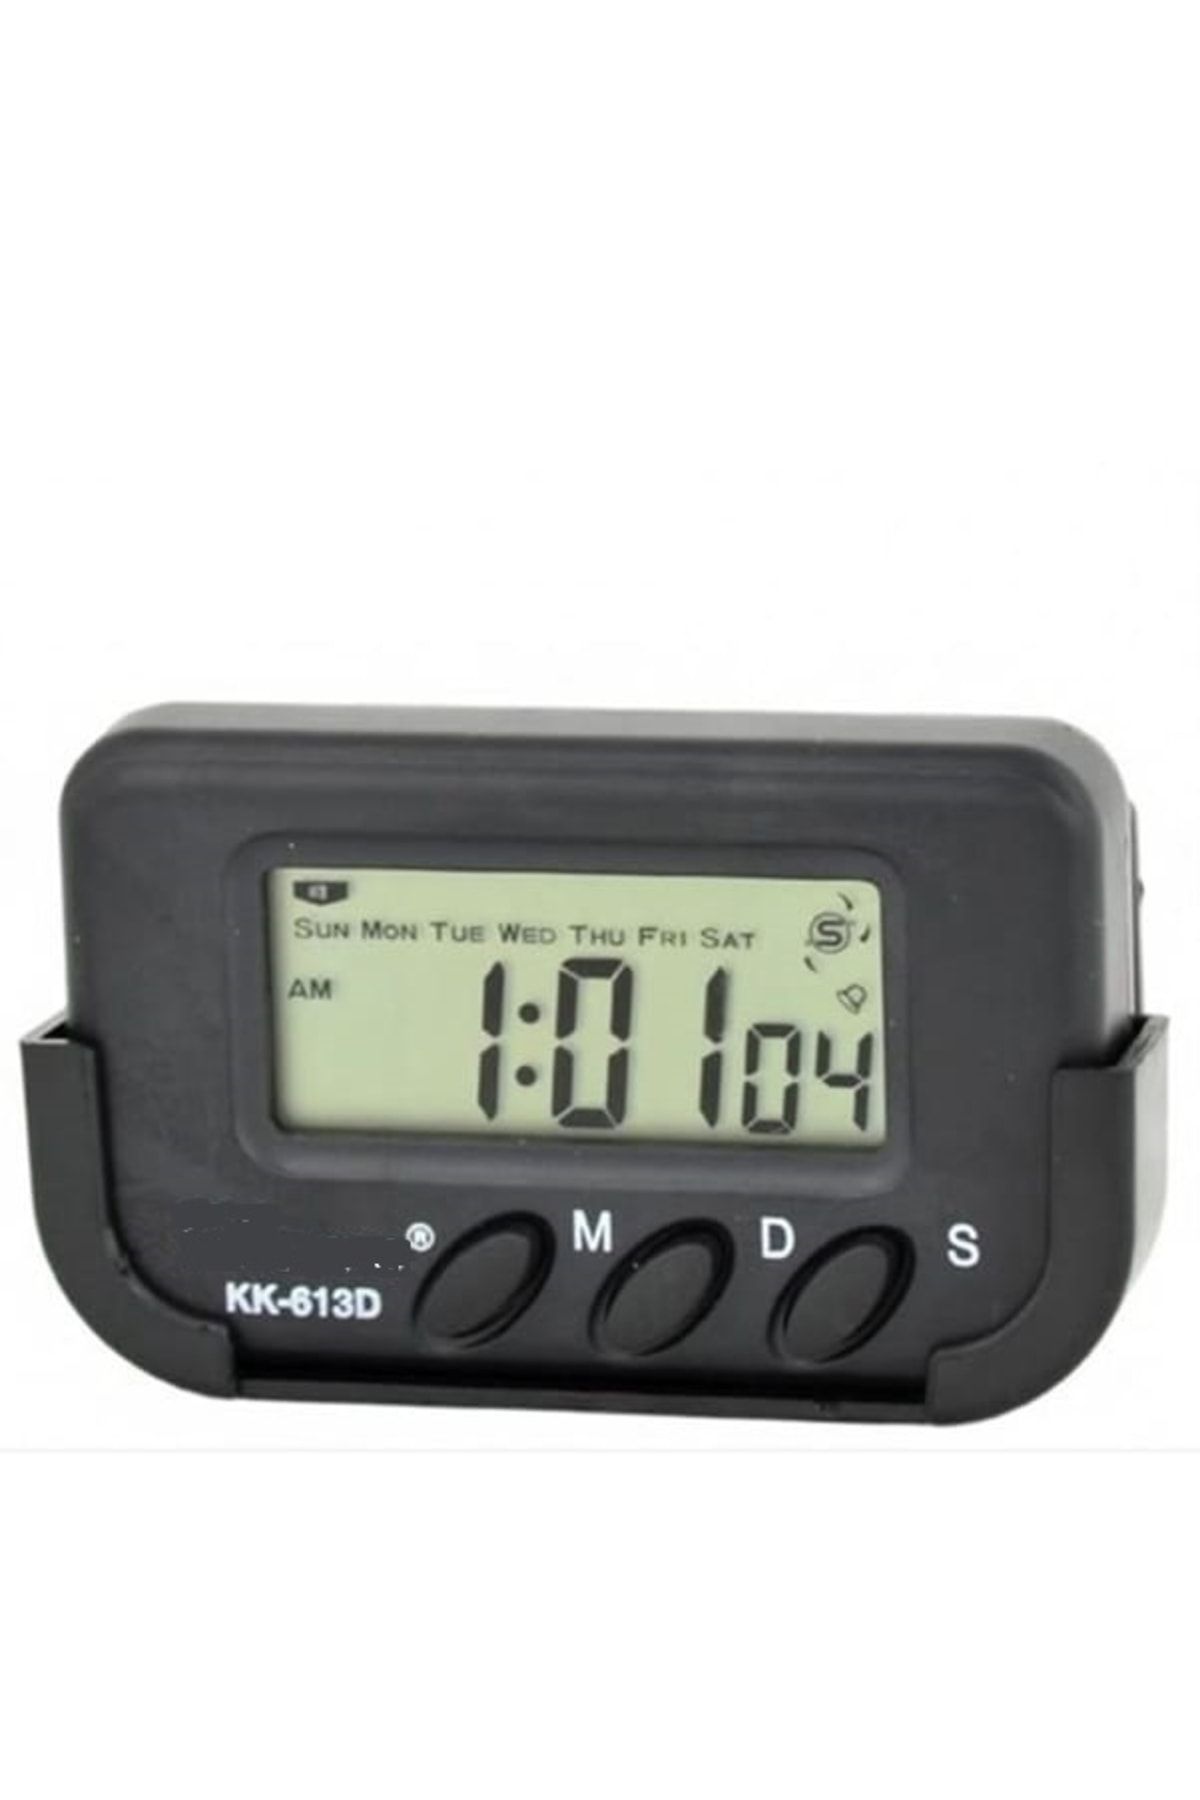 ocasso Küçük Dijital Masa Saati Araba Saati Alarm Kronometre Araç Içi Mını Dijital Saat Kronometreli